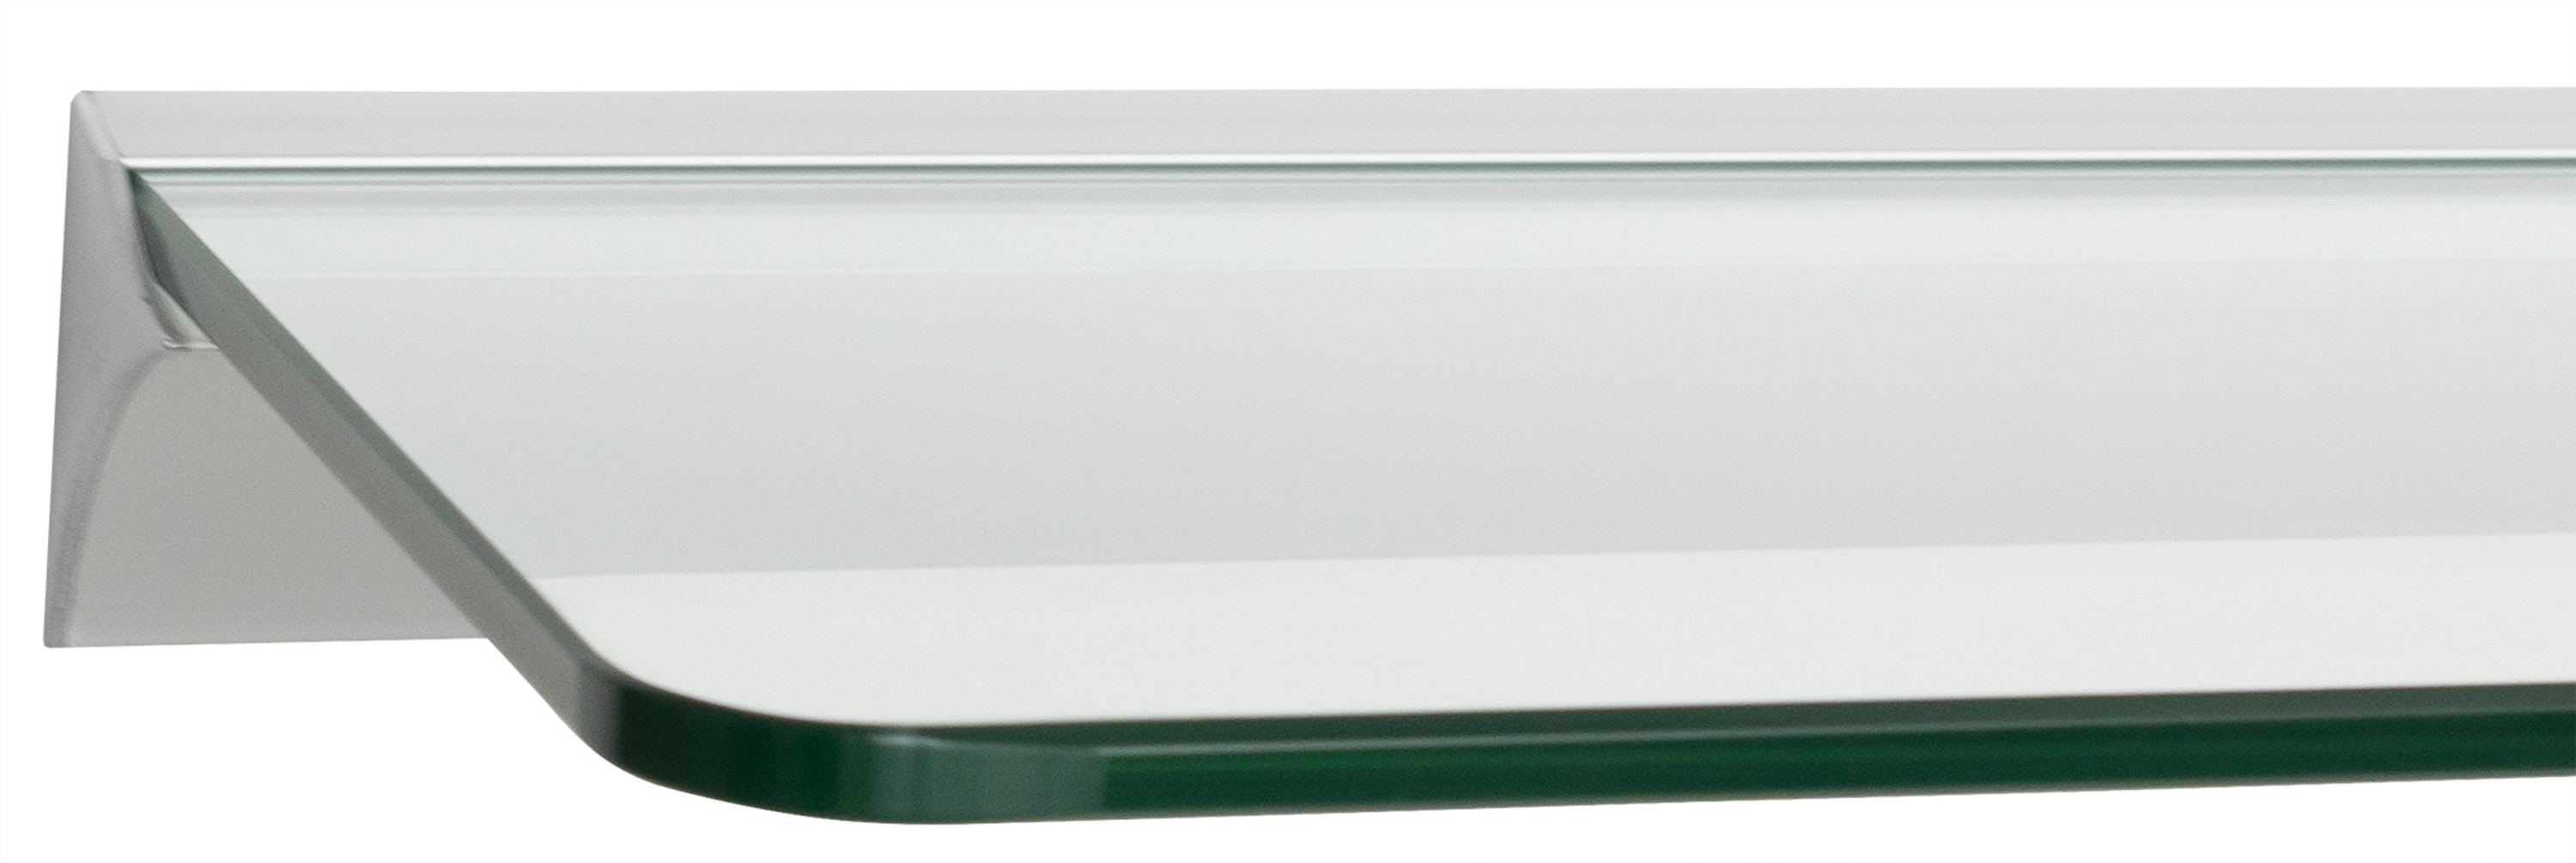 Profil Klemmleiste silbermatt Aluminium  für 8mm Regalböden Glasböden /Wandregal 